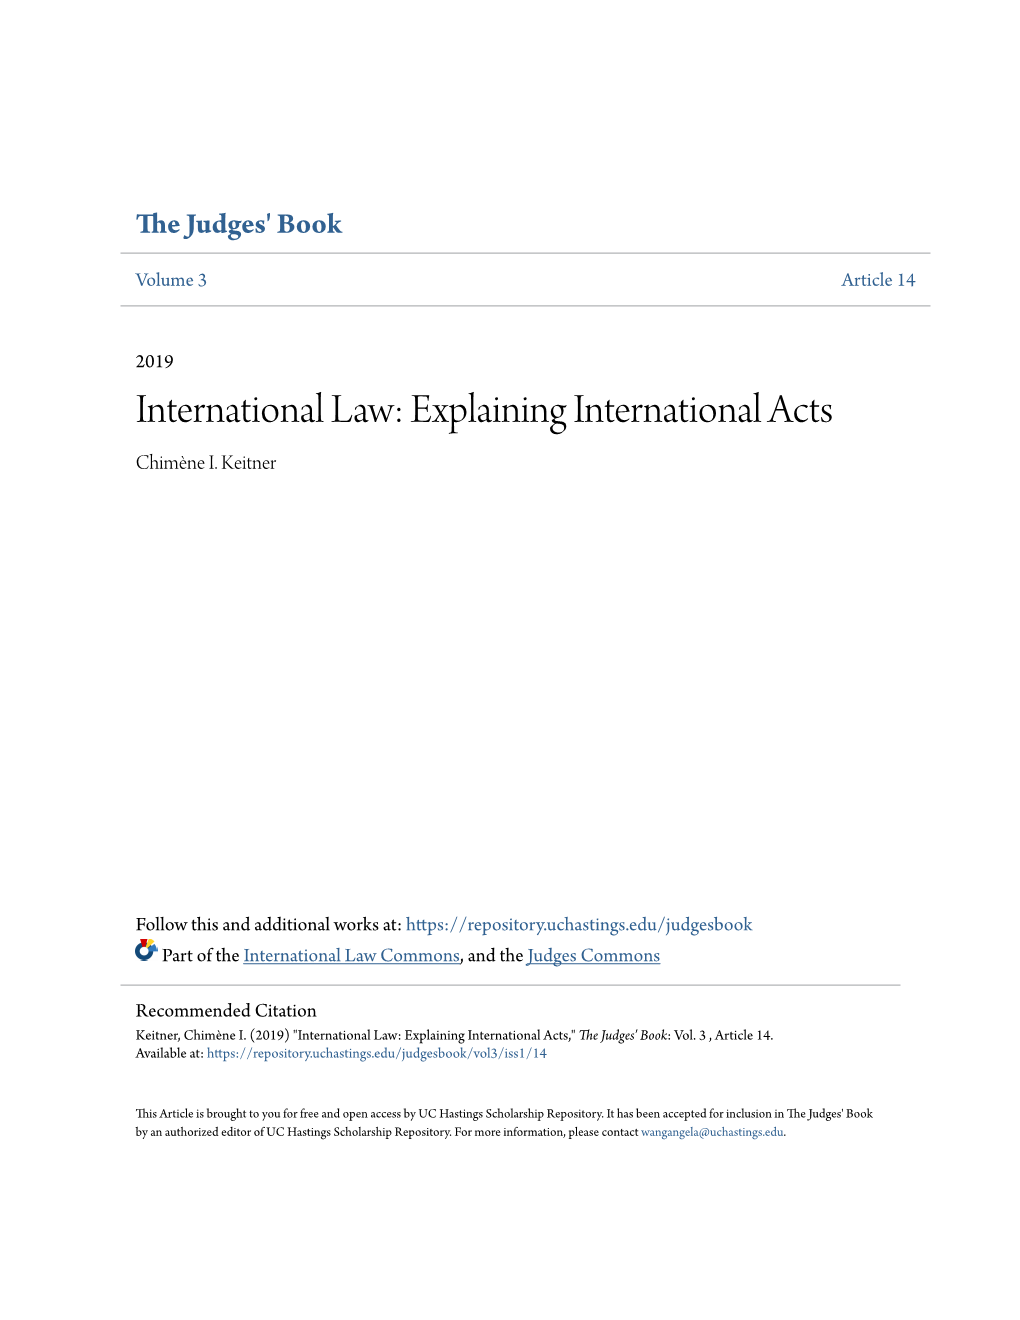 International Law: Explaining International Acts Chimène I